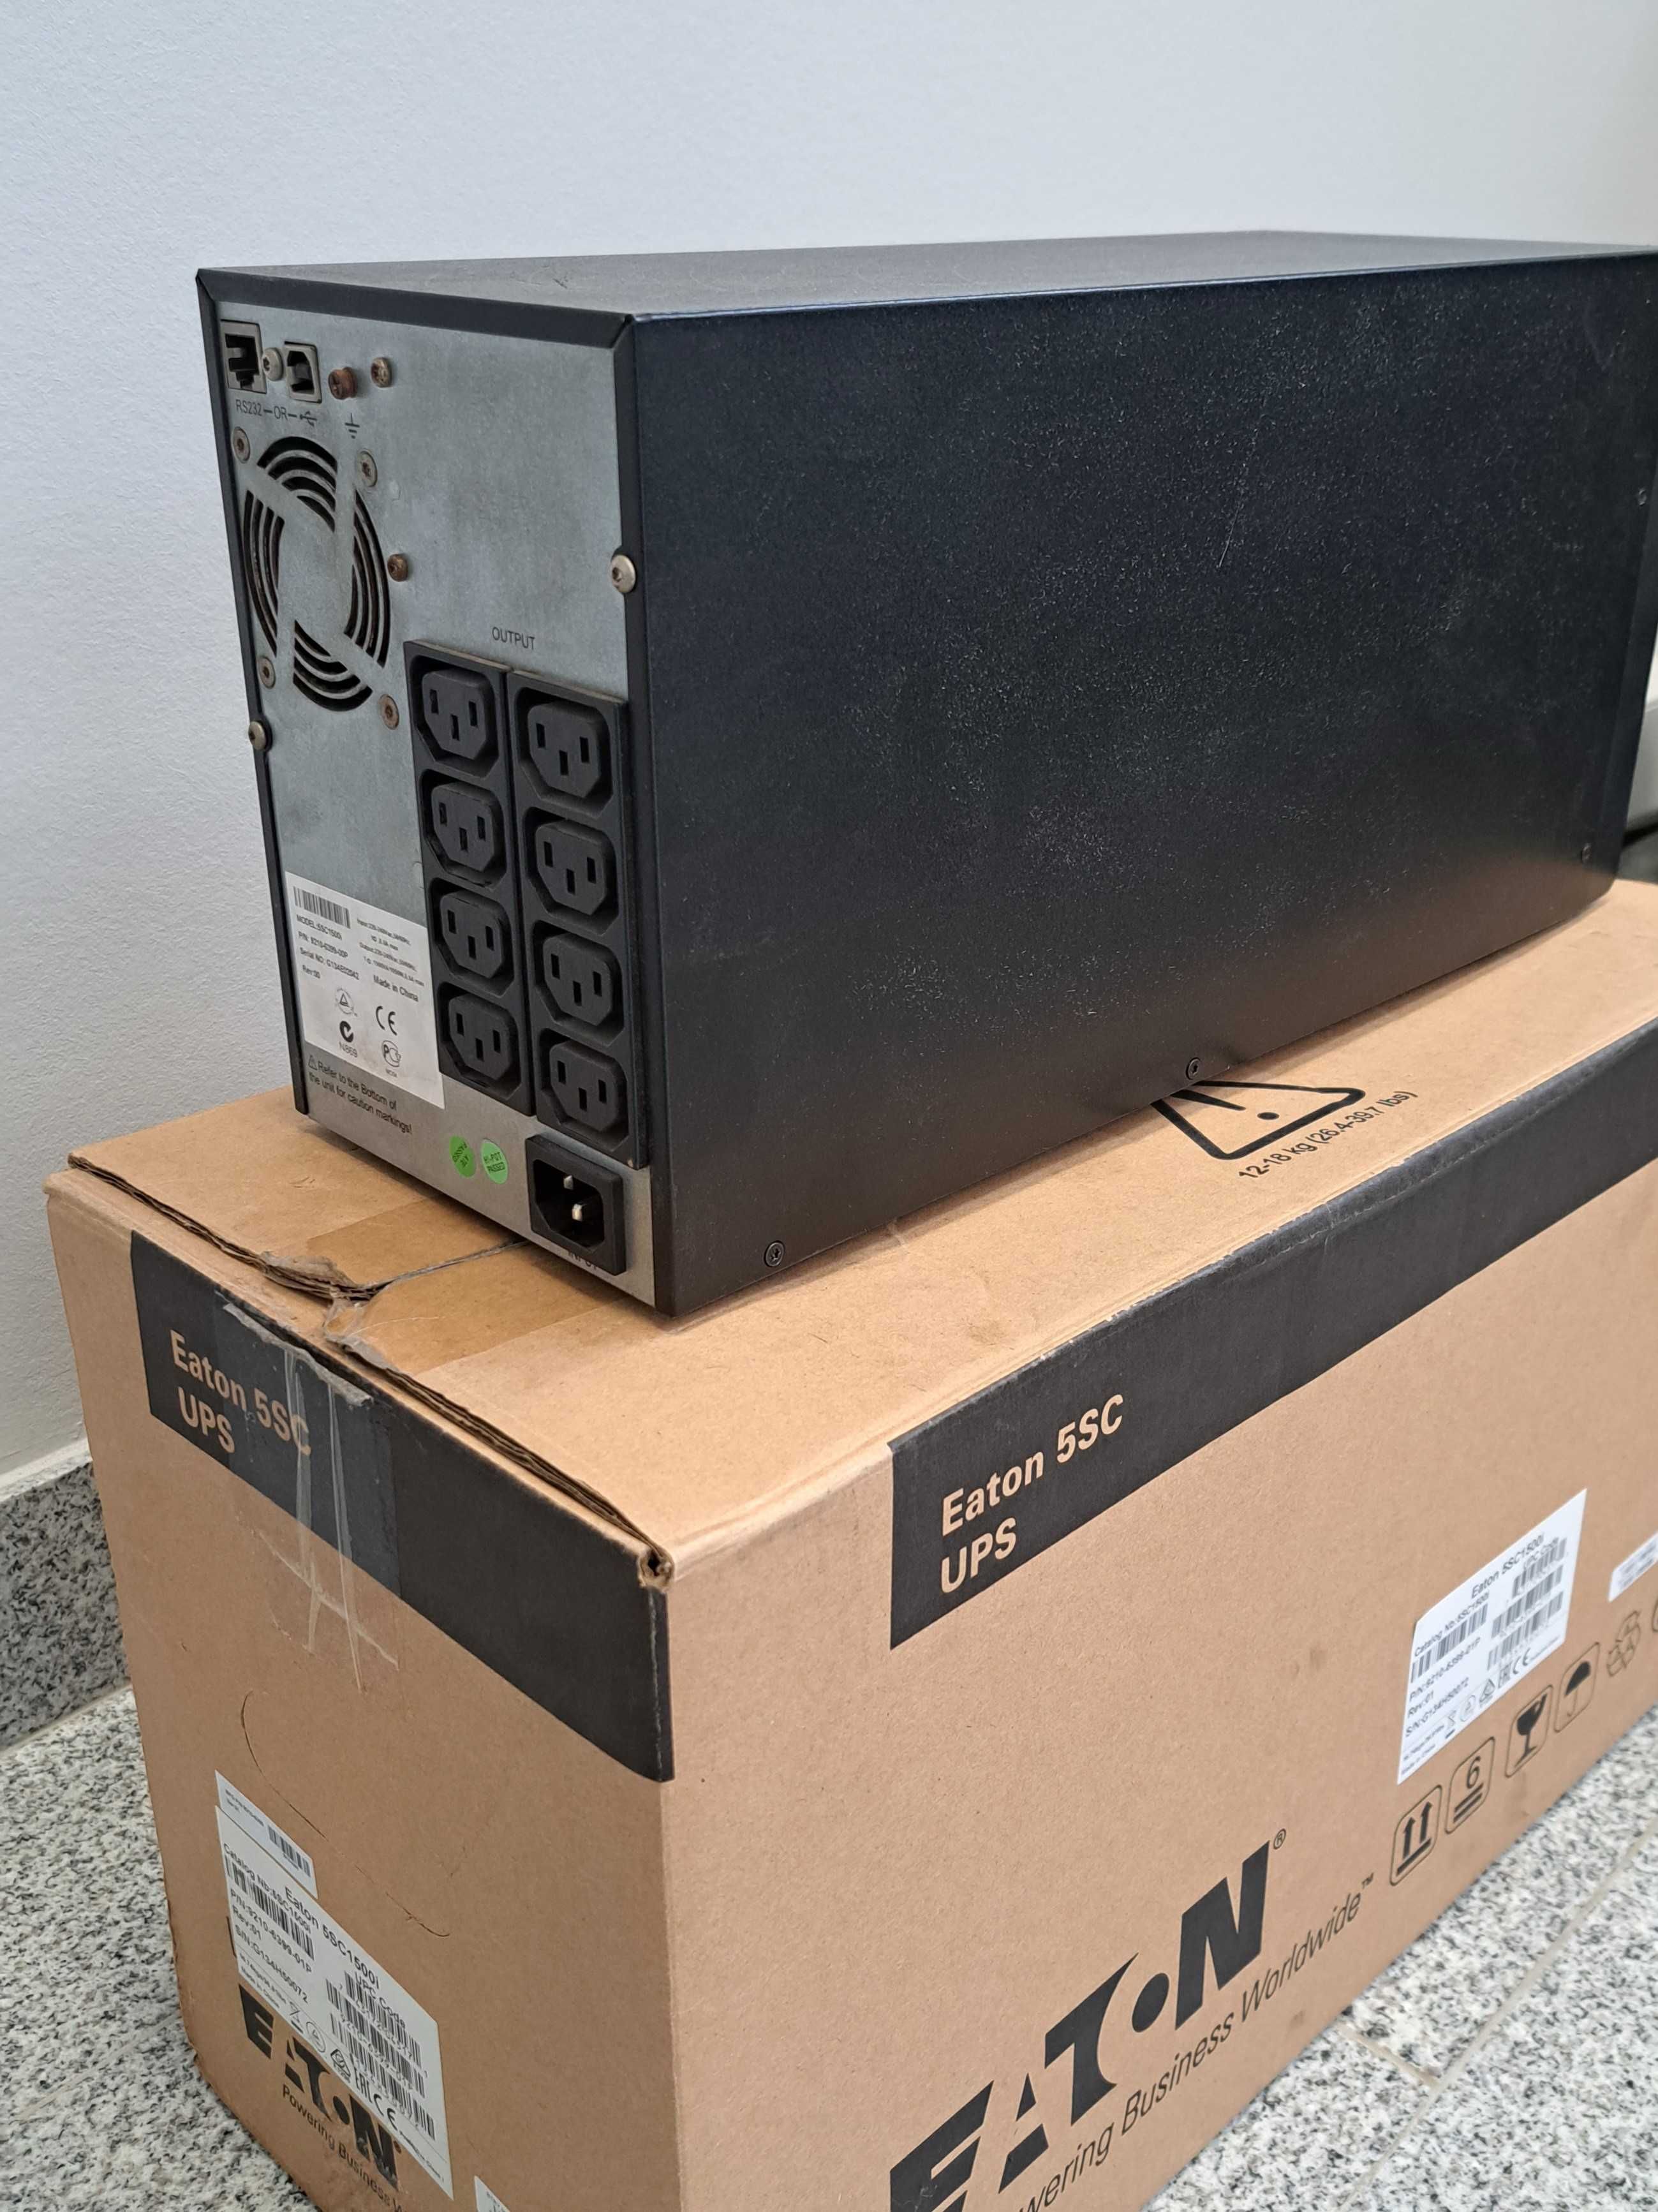 UPS Eaton 5SC1500I, nowe akumulatory